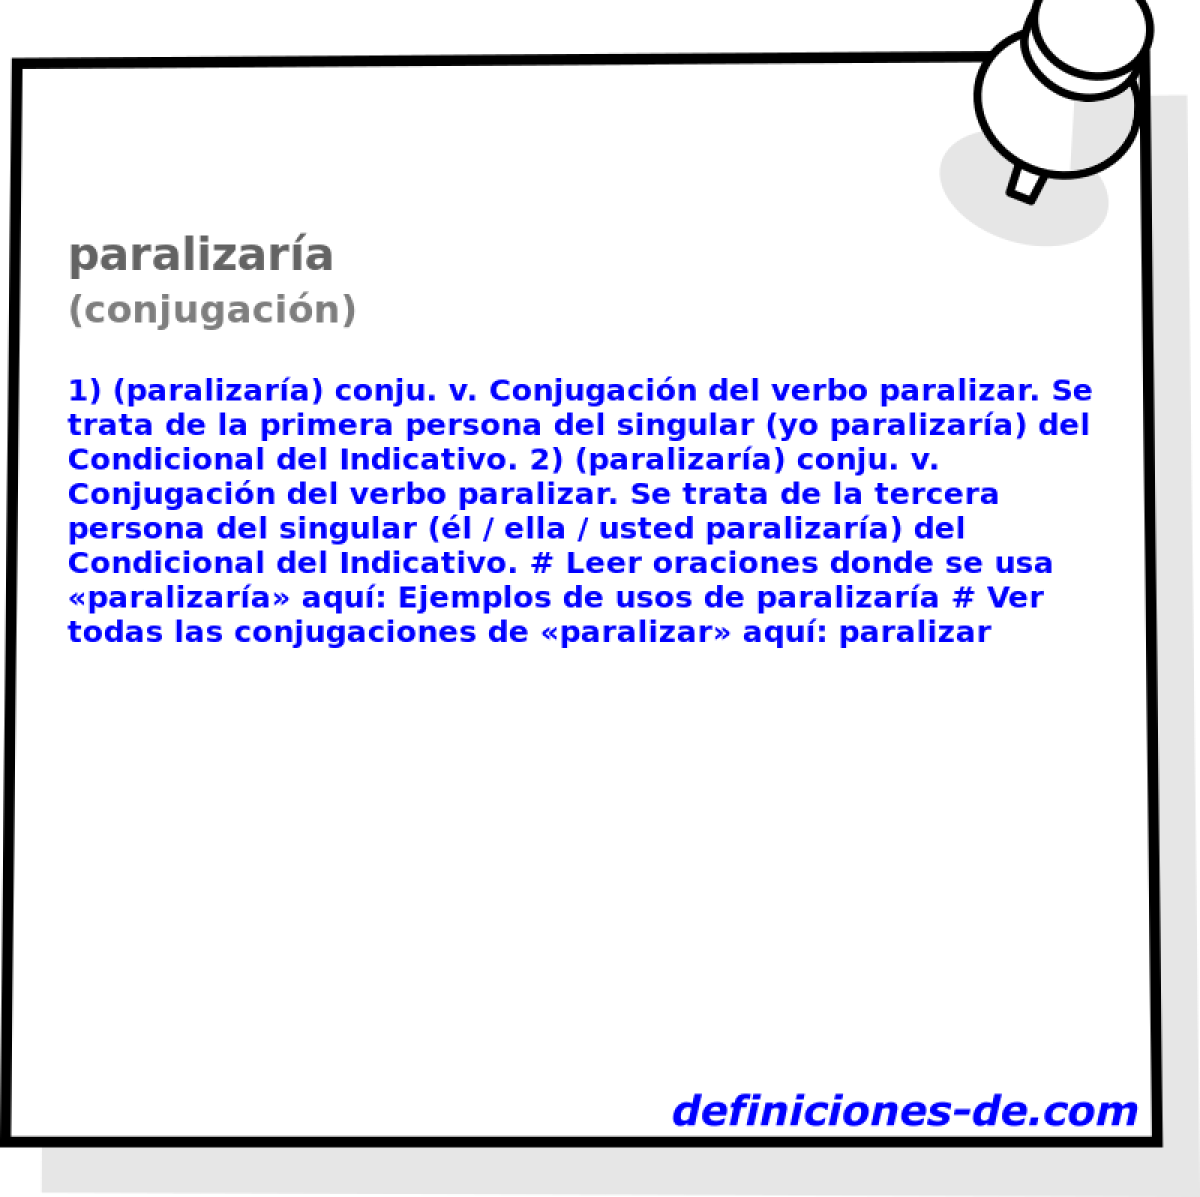 paralizara (conjugacin)